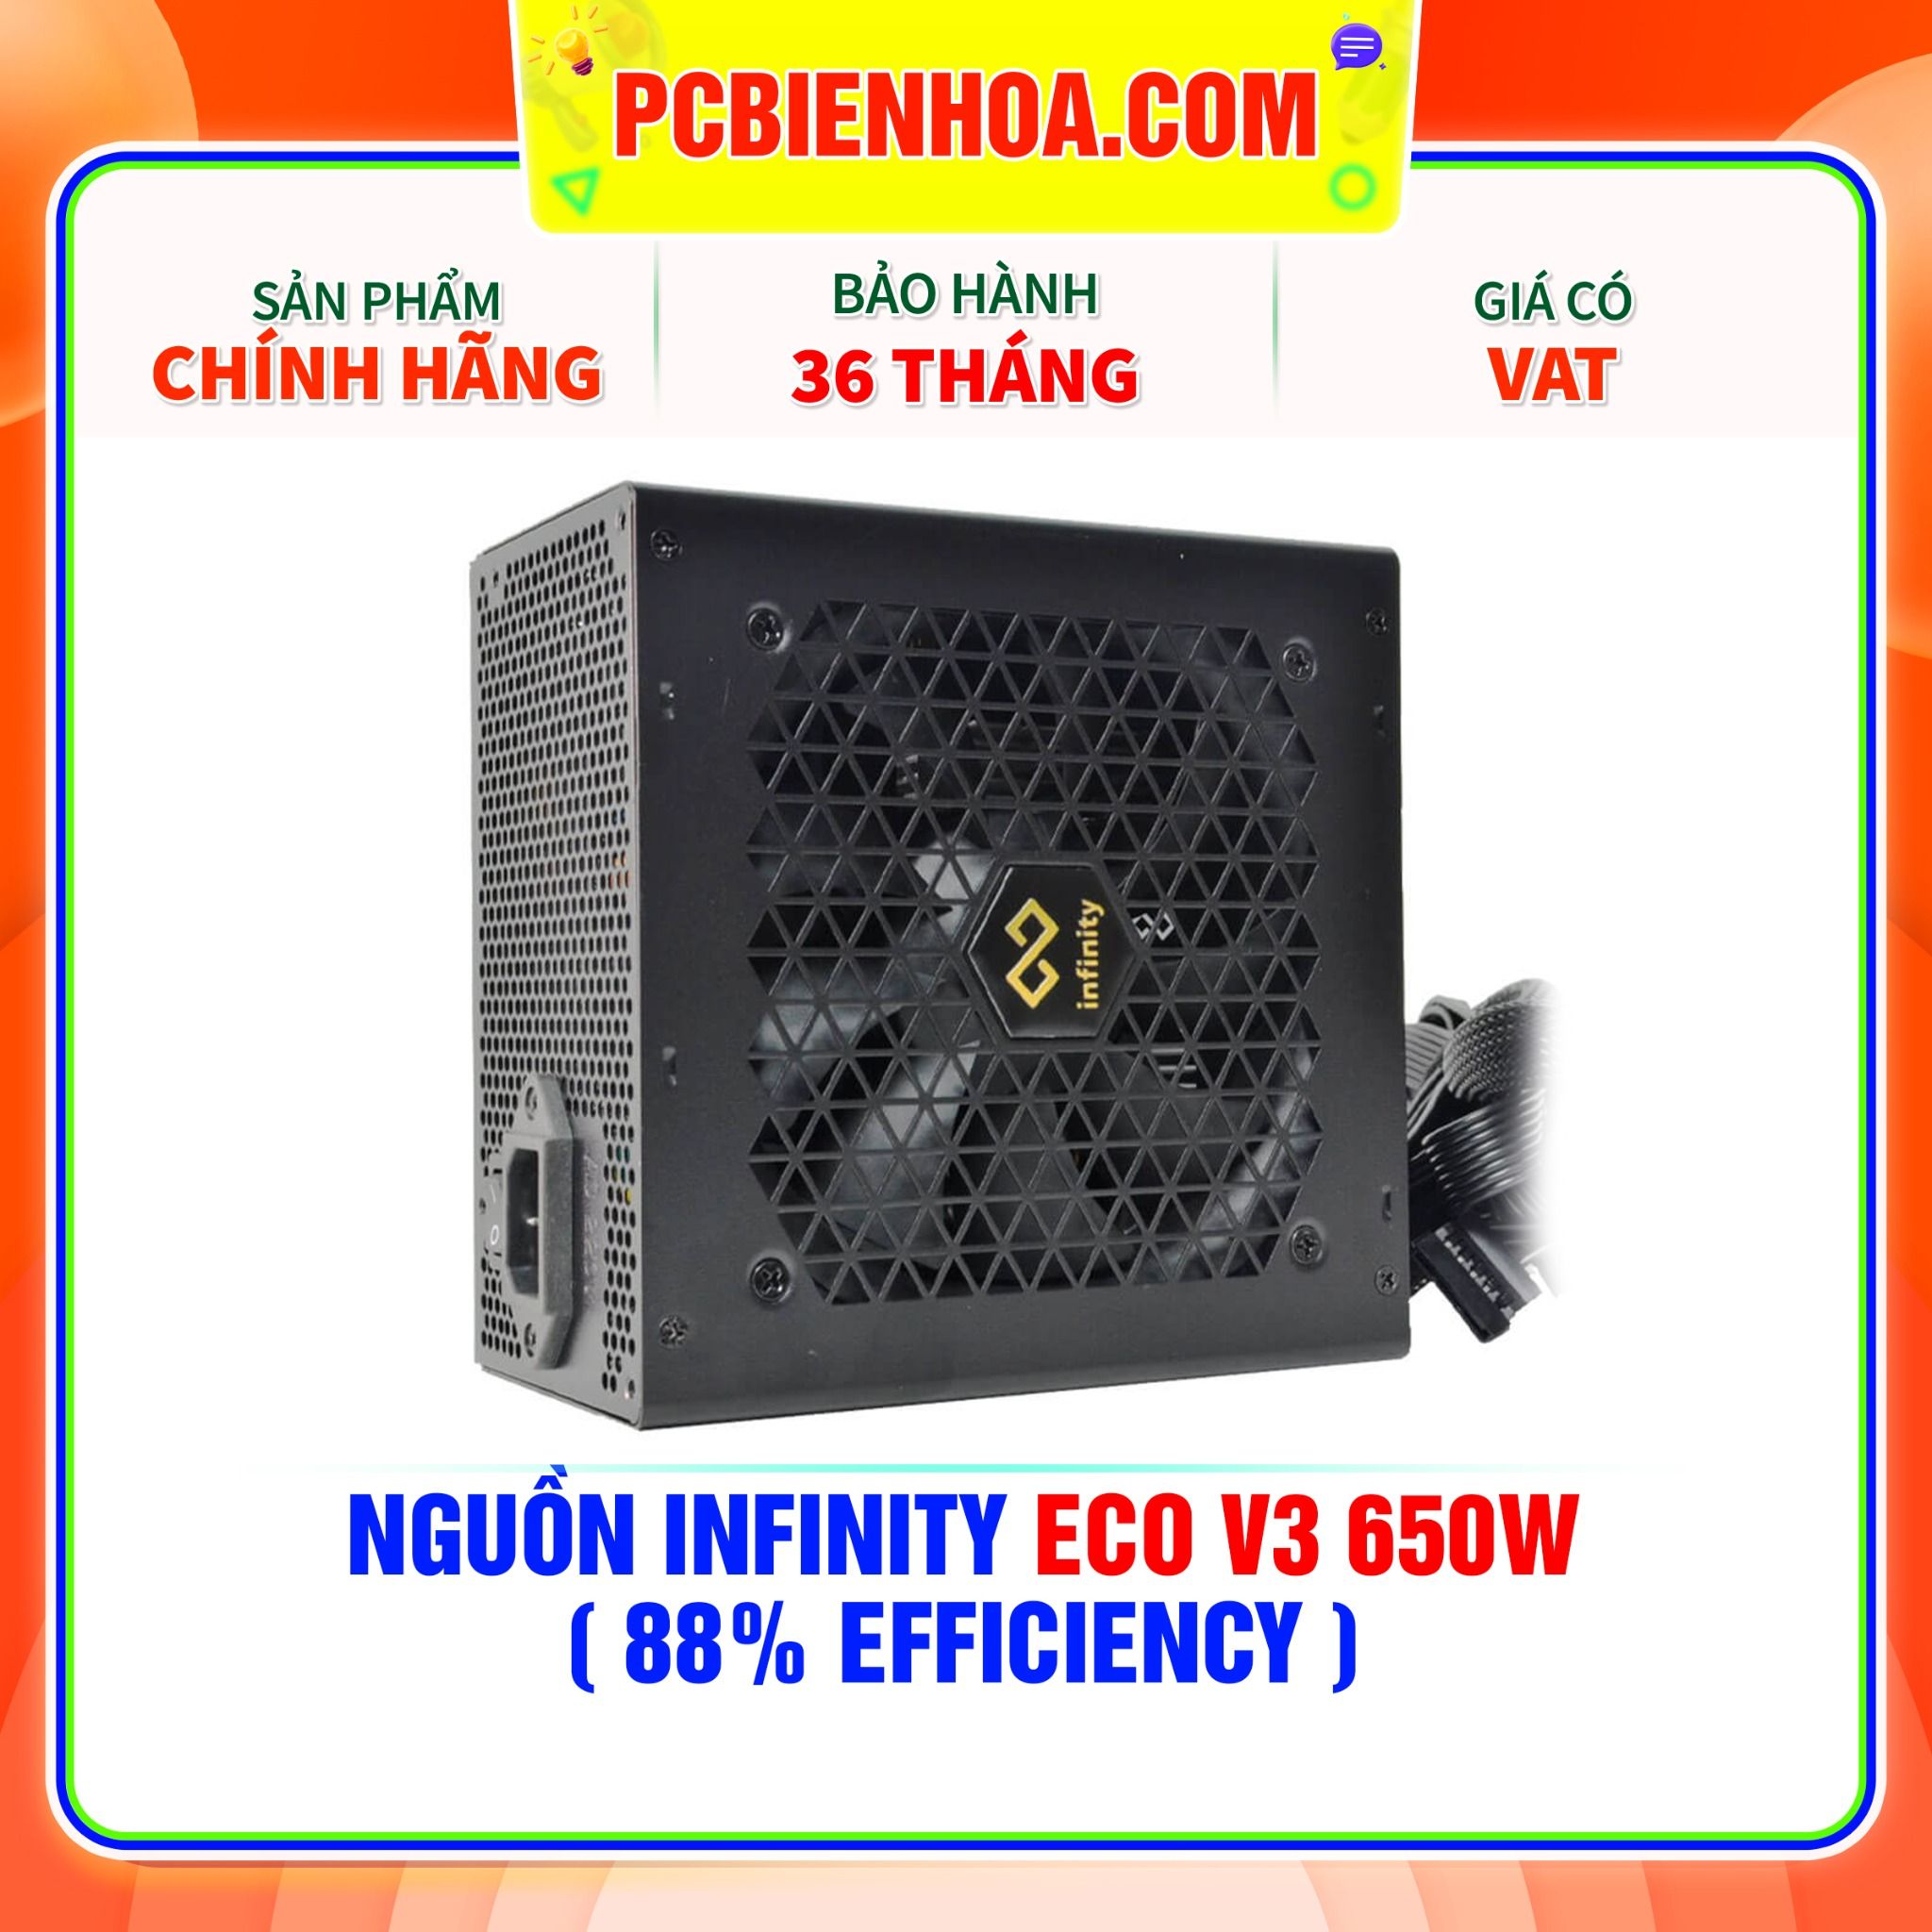  NGUỒN INFINITY ECO V3 650W ( 88% EFFICIENCY ) 